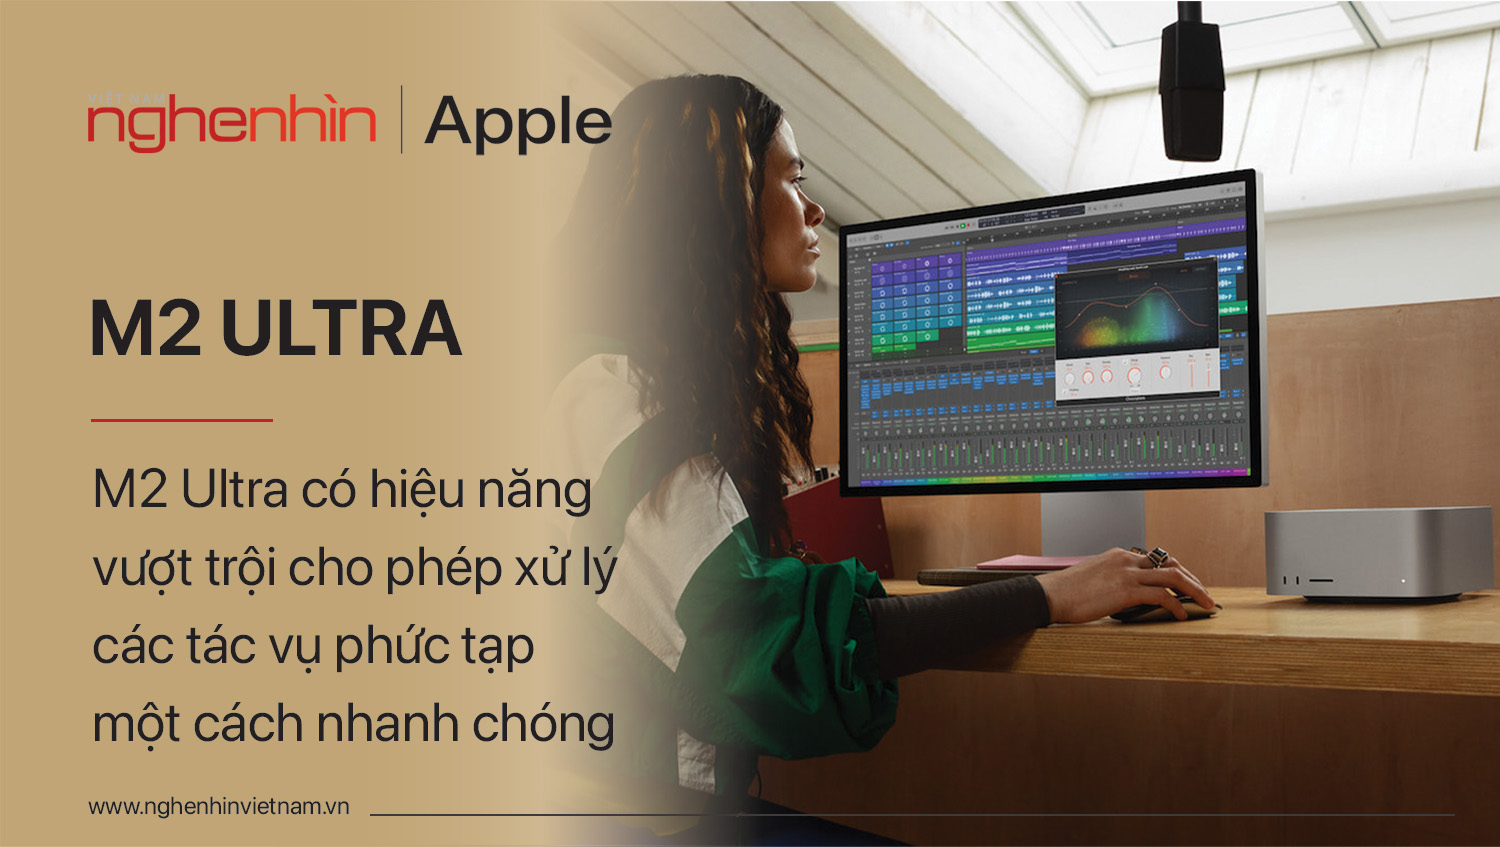 apple-ra-mat-con-chip-m2-ultra-3-1.jpg (243 KB)